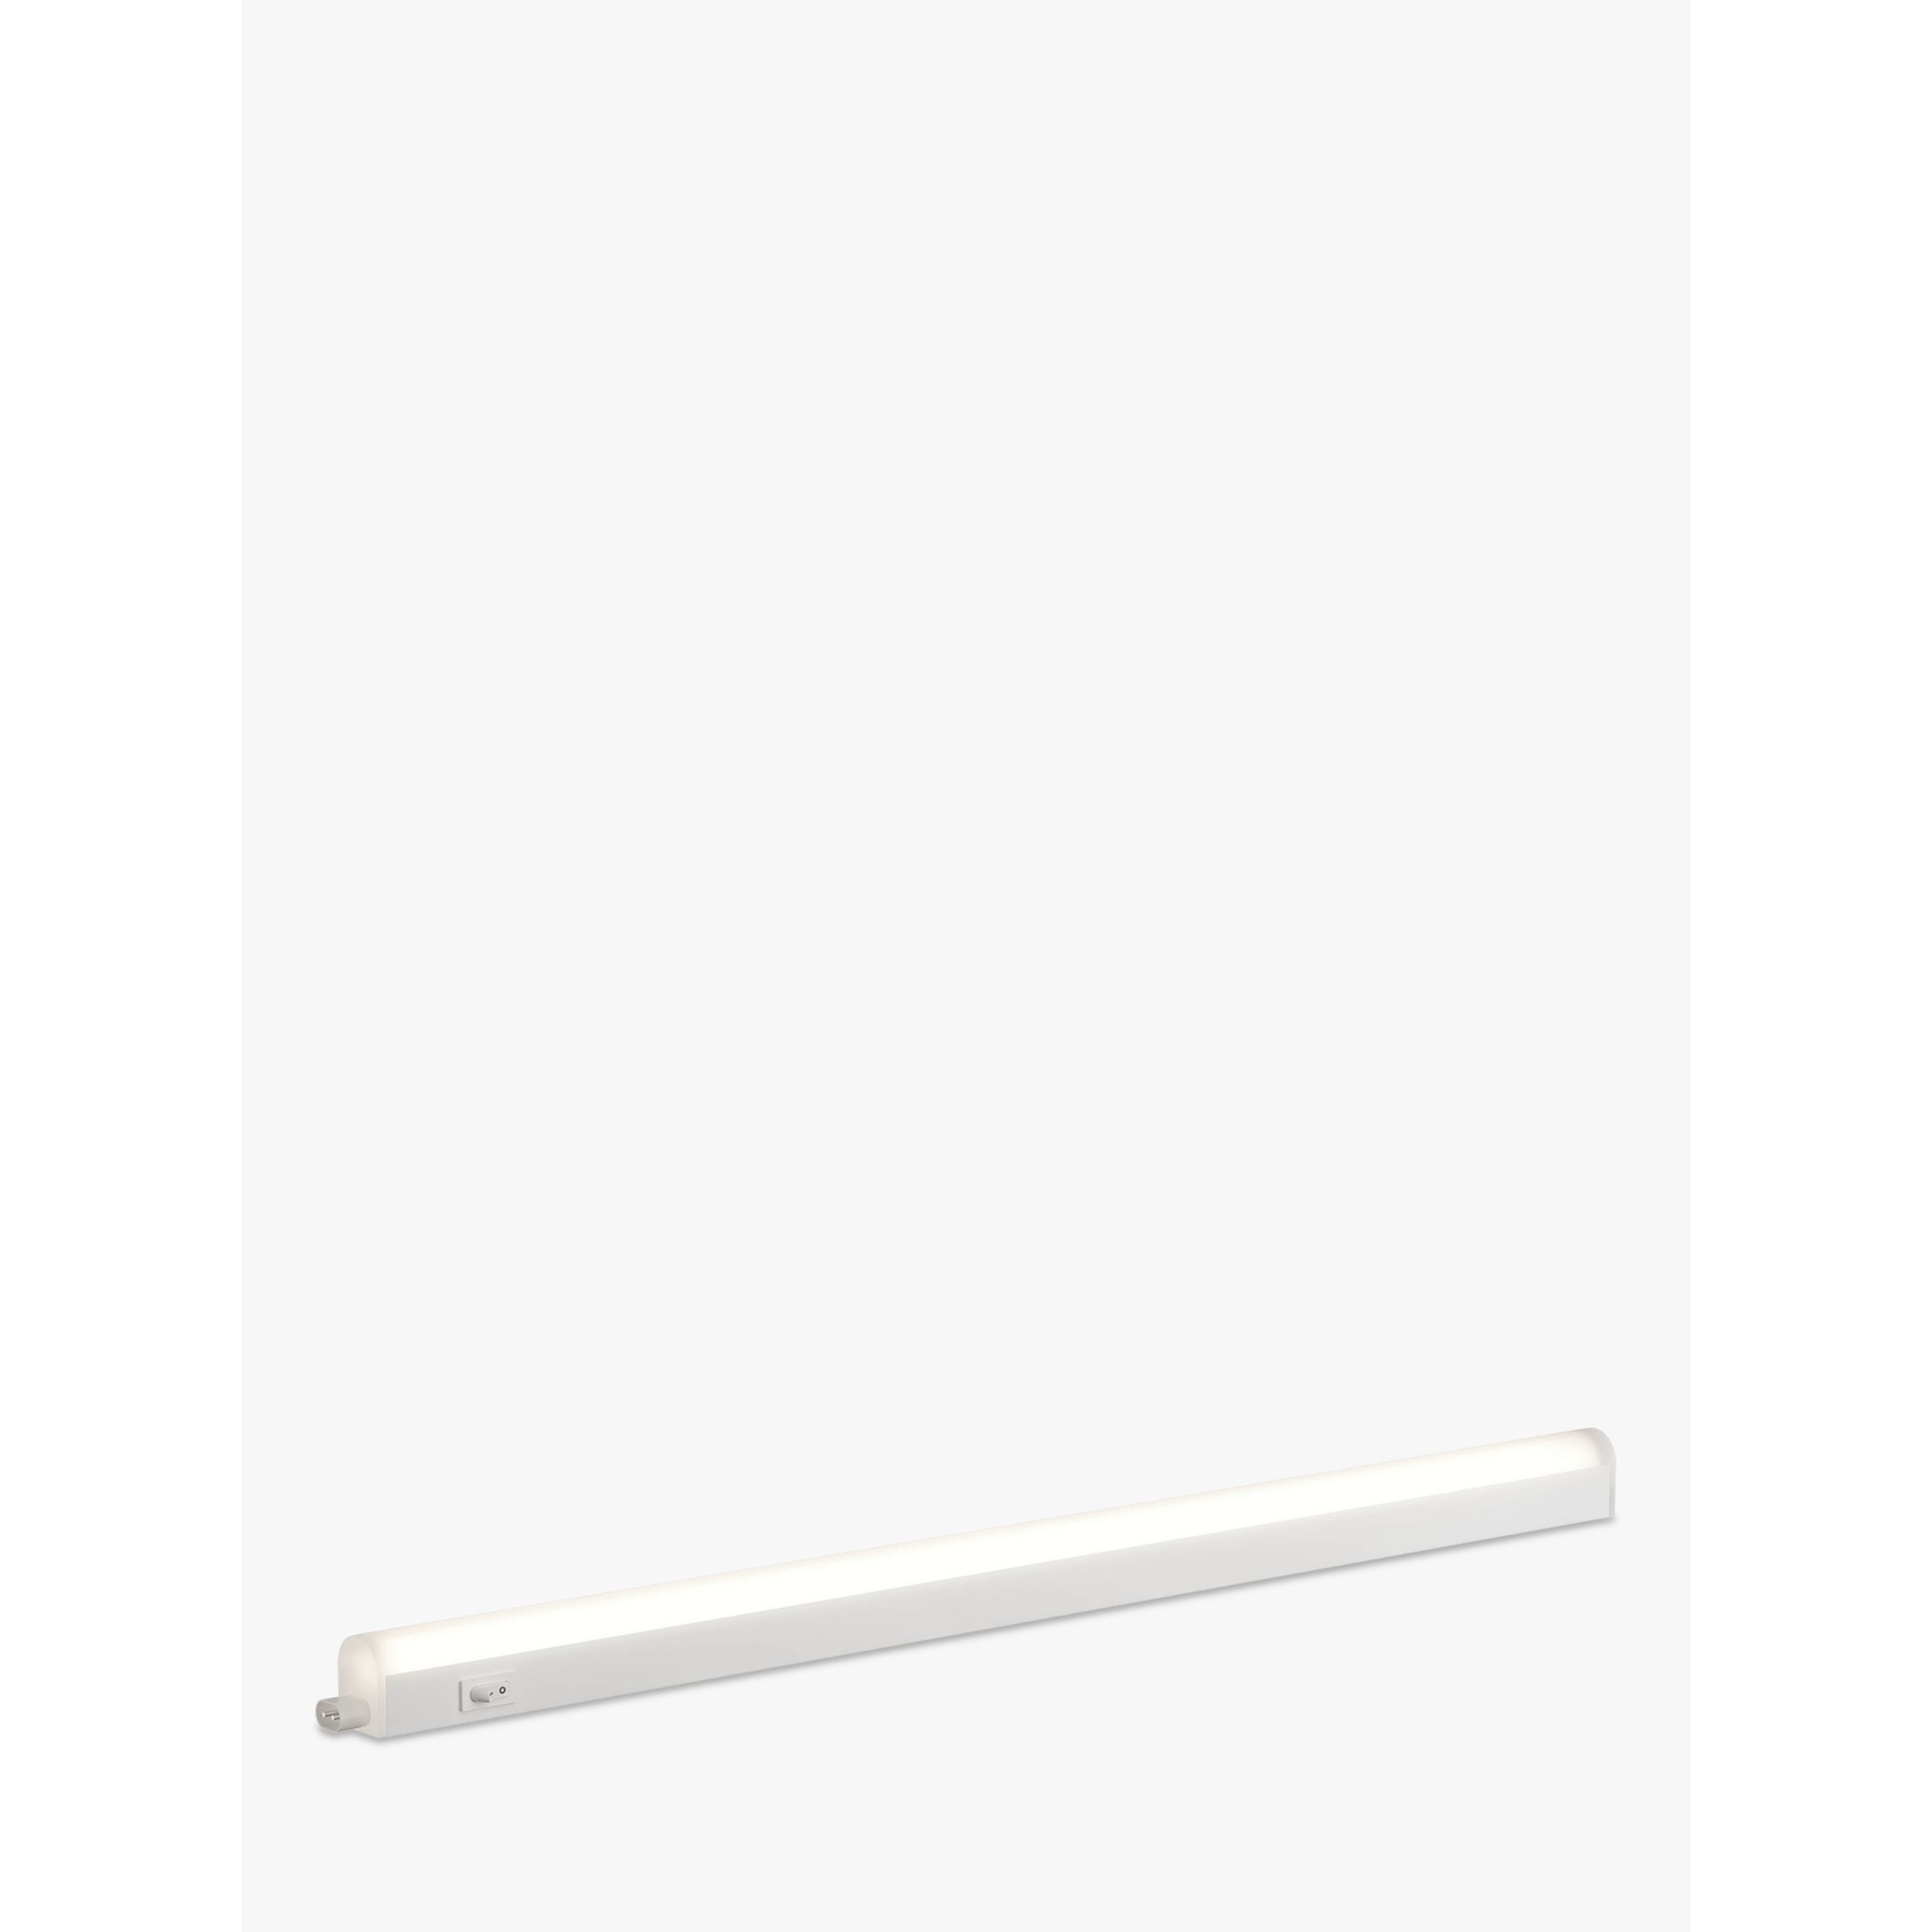 Sensio Axis LED Kitchen Cabinet Strip Light, Natural White Light - image 1